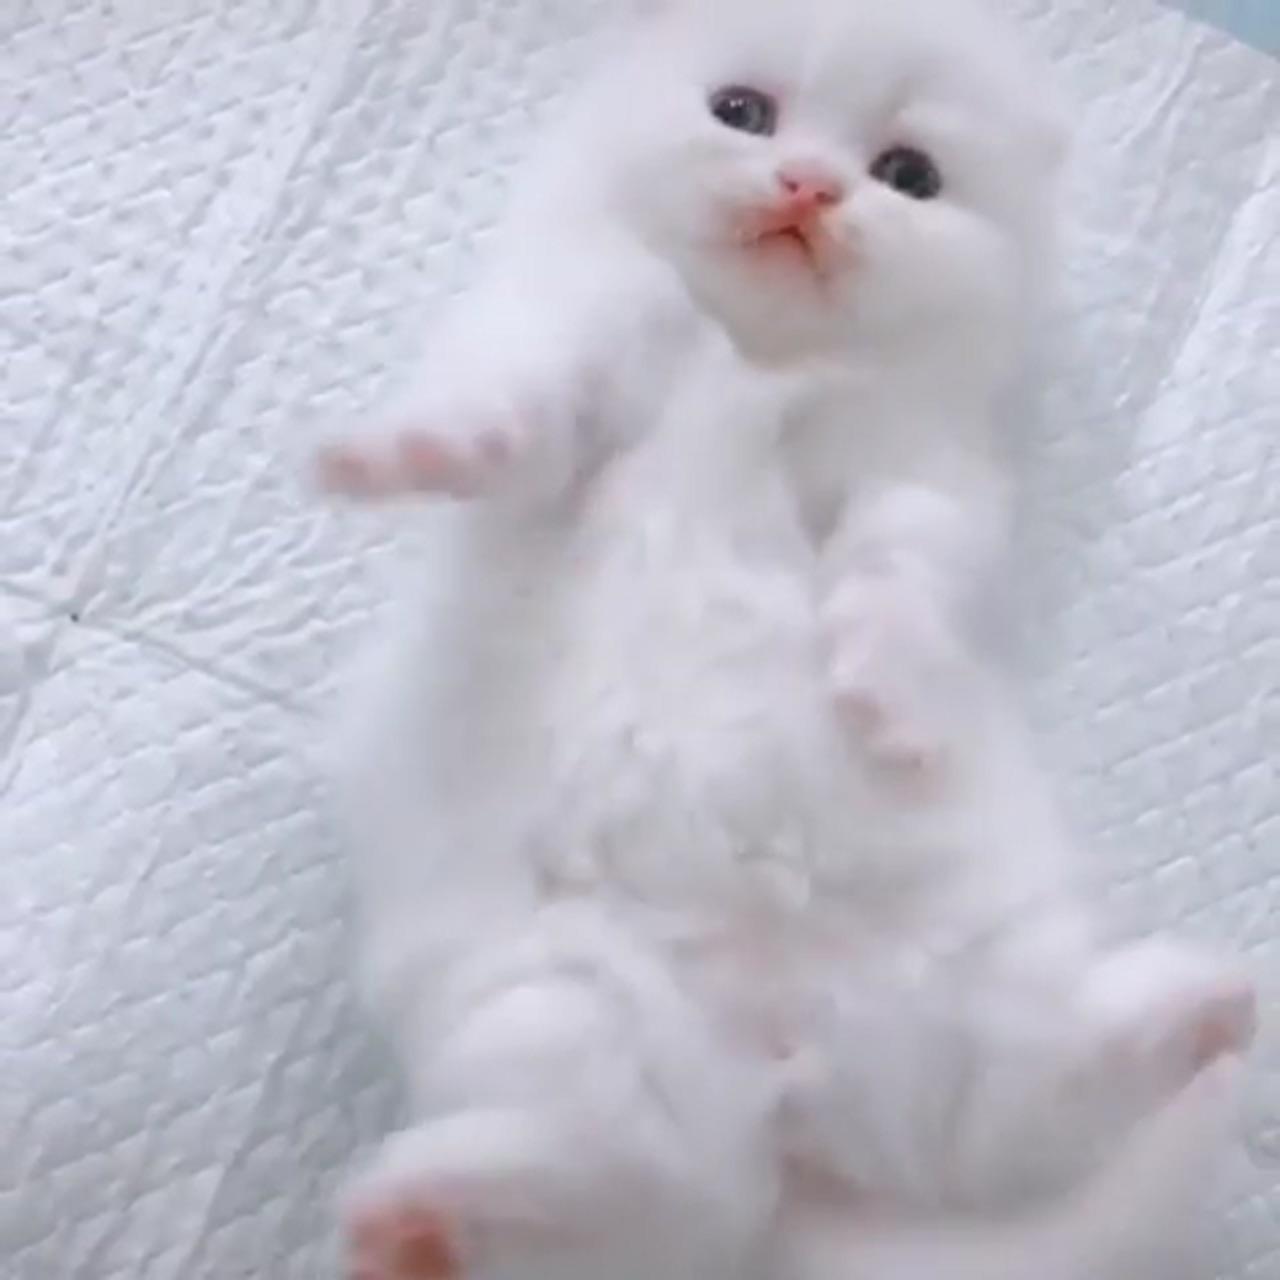 Funnyburst; cute little kittens